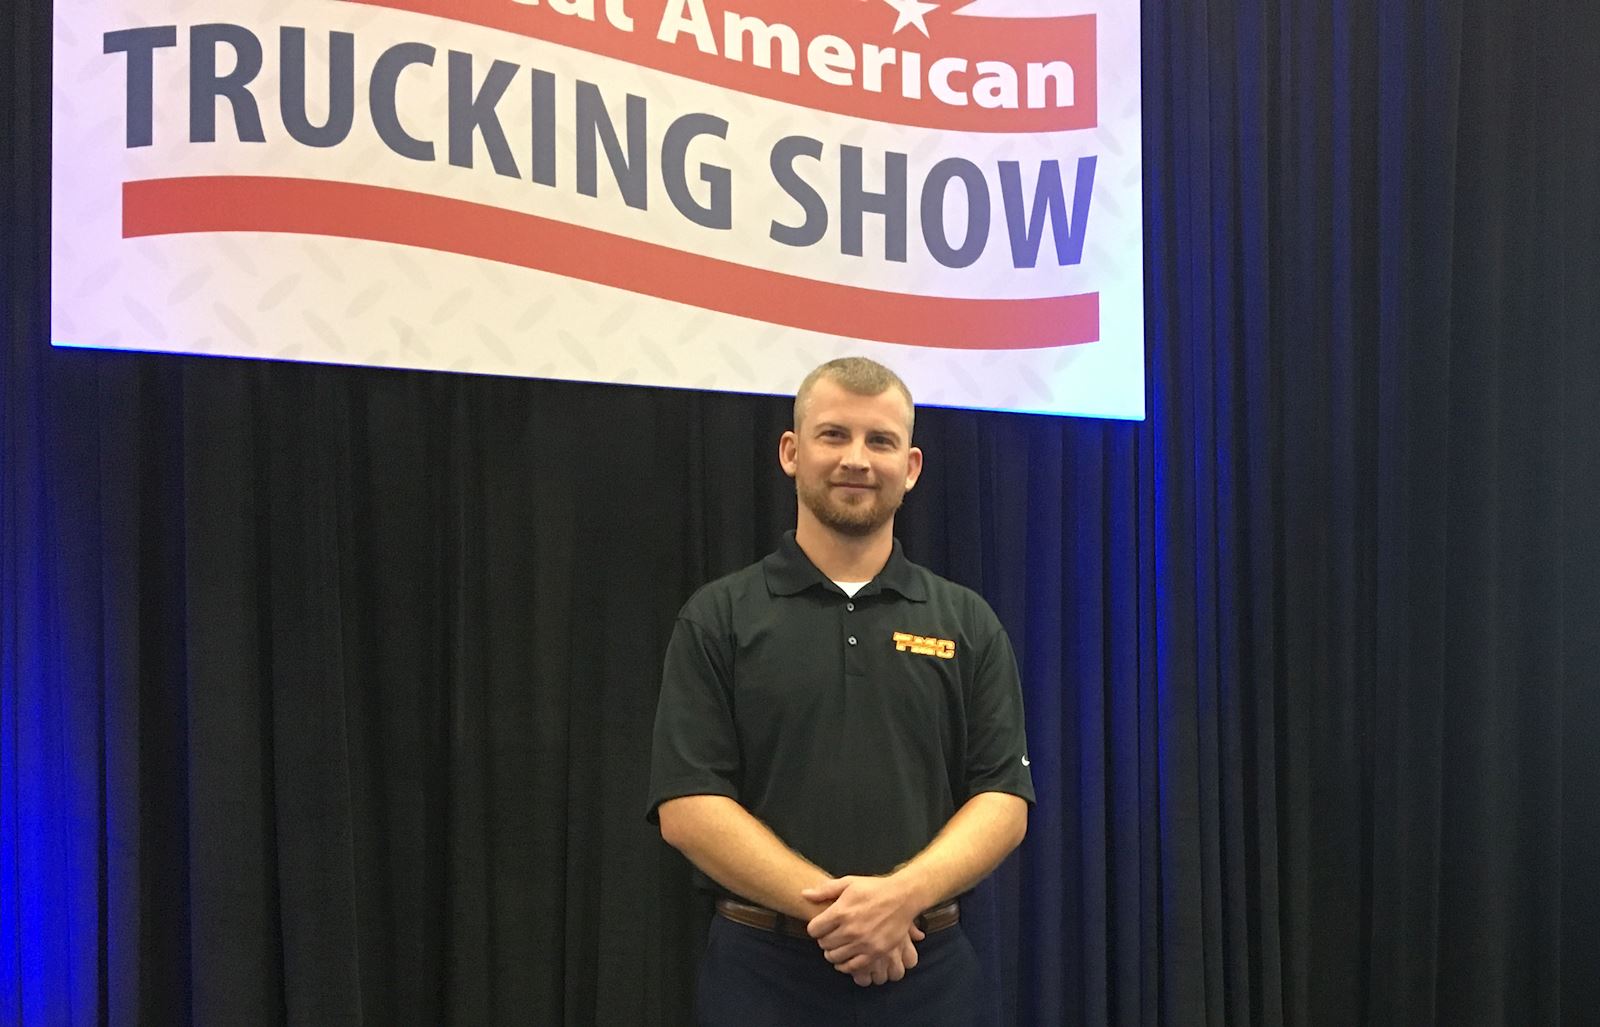 American Trucking Show Jobs Trucks Flatbed Hiring